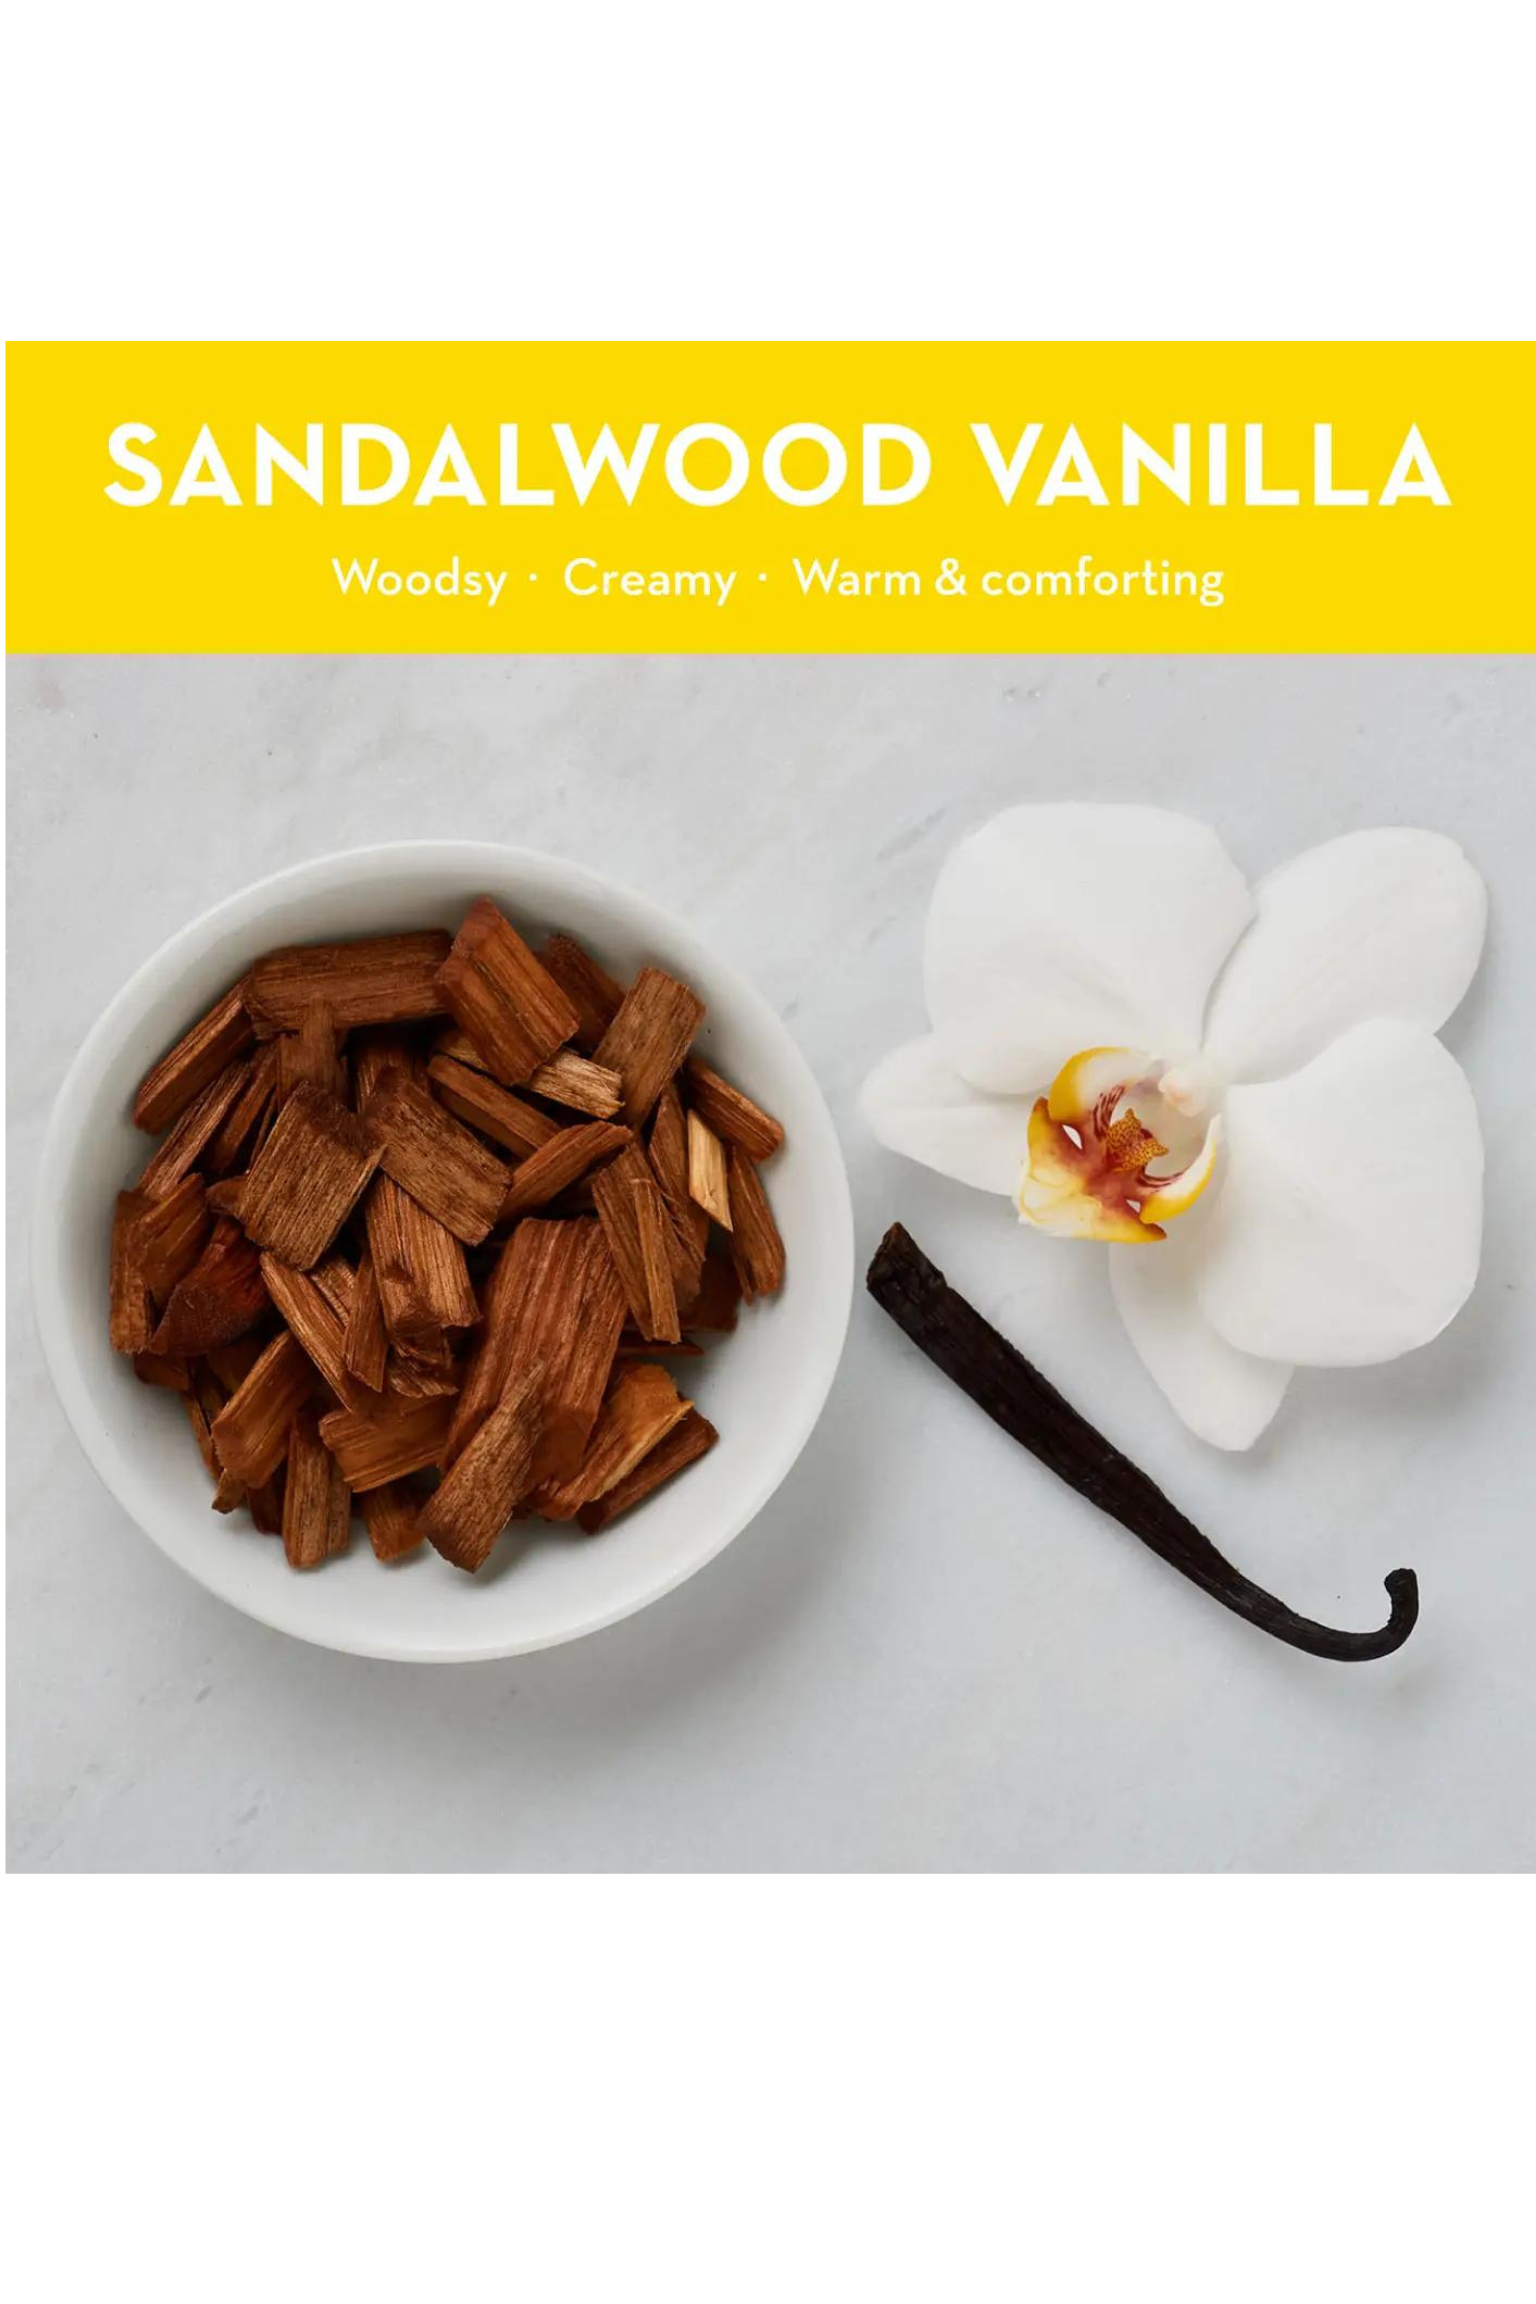 2oz Sandalwood Vanilla